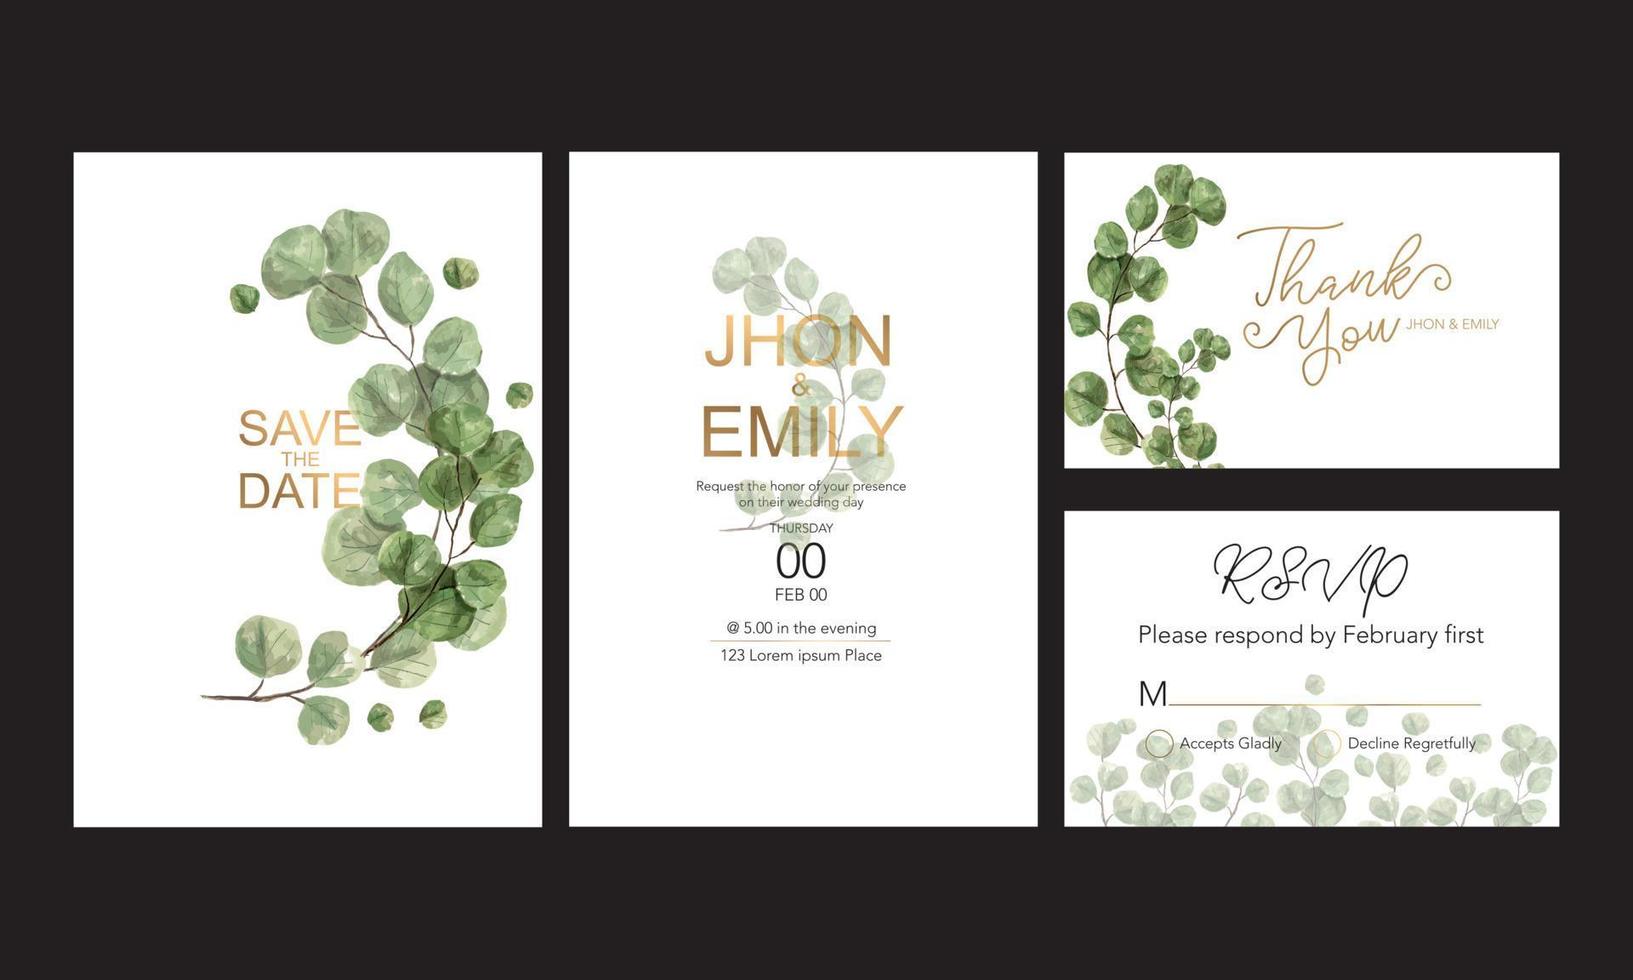 Wedding Invitation card, floral invite thank you, rsvp modern card Design, green eucalyptus leaf greenery eucalyptus. vector